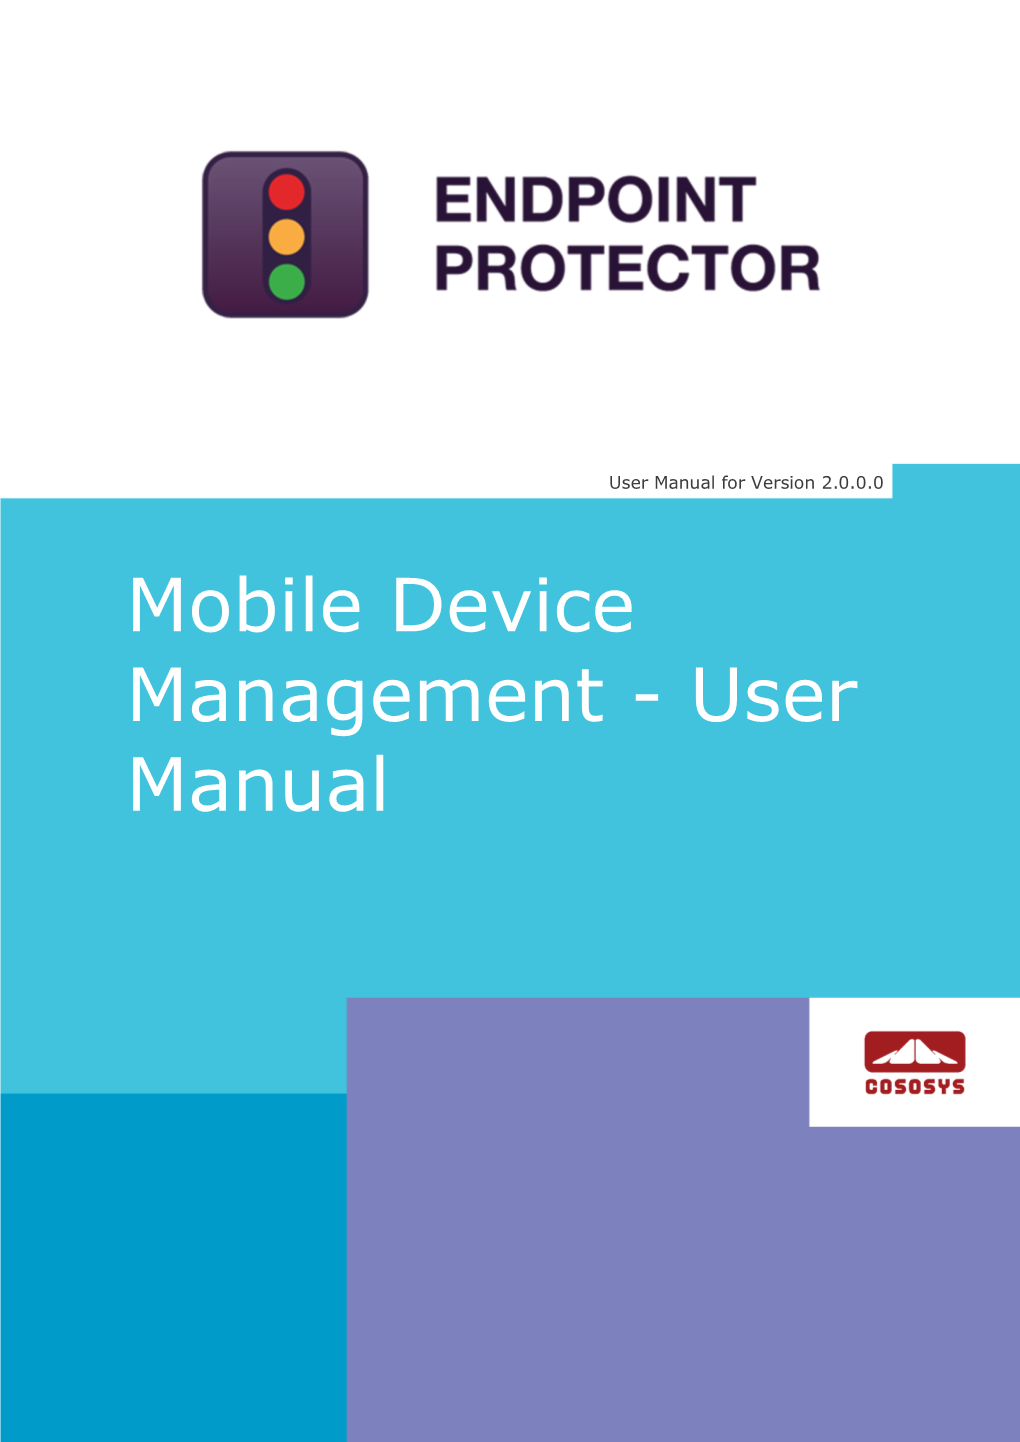 Mobile Device Management - User Manual I | Endpoint Protector – Mobile Device Management | User Manual